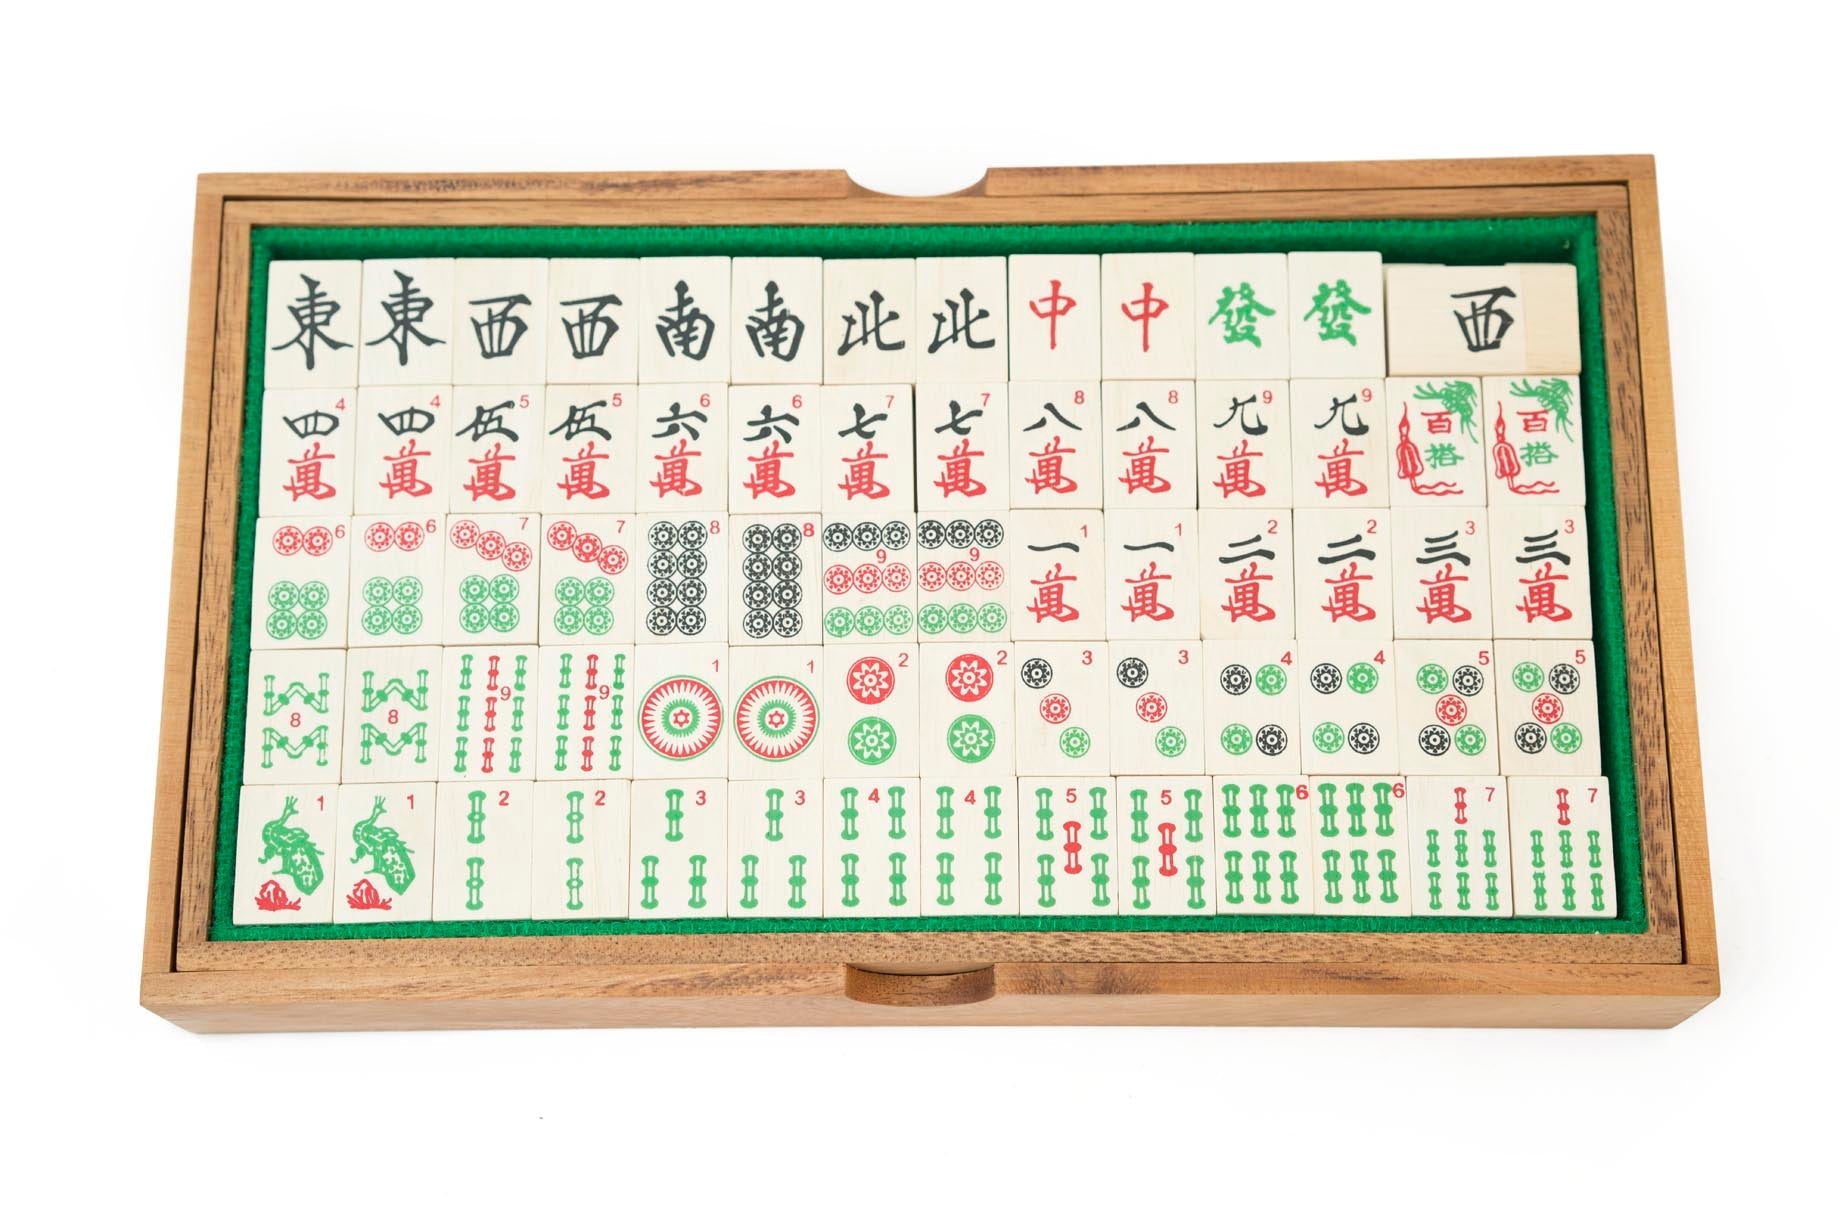 Wooden Mahjong Board Game – Kubiya Games